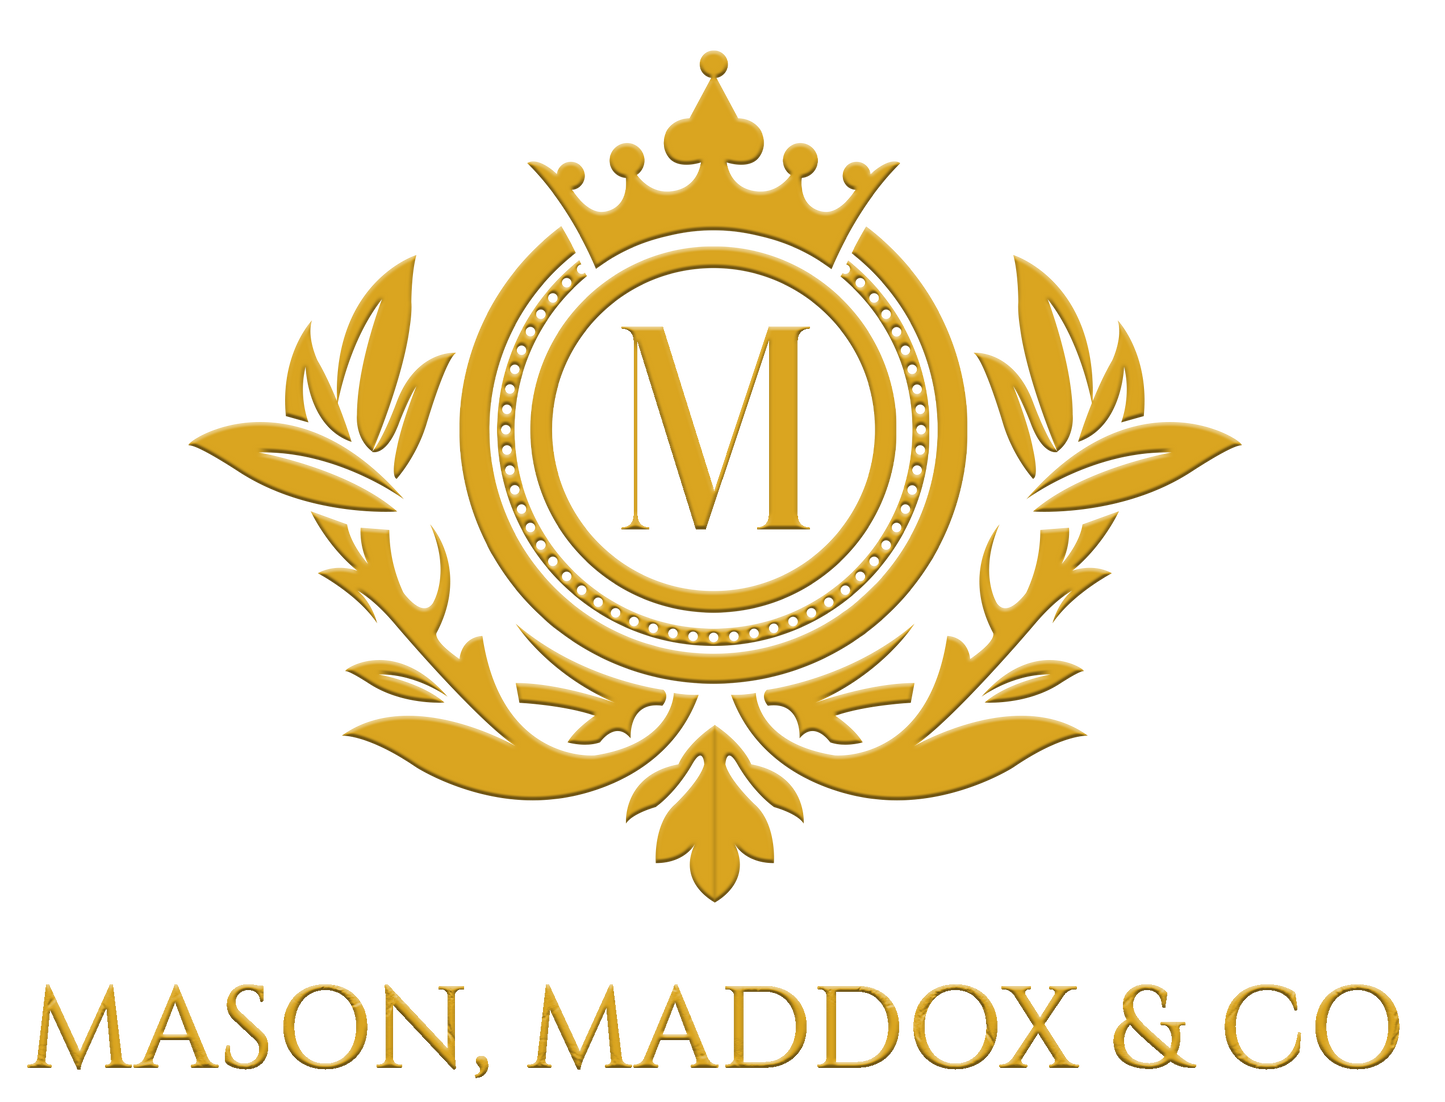 Mason, Maddox & Co.